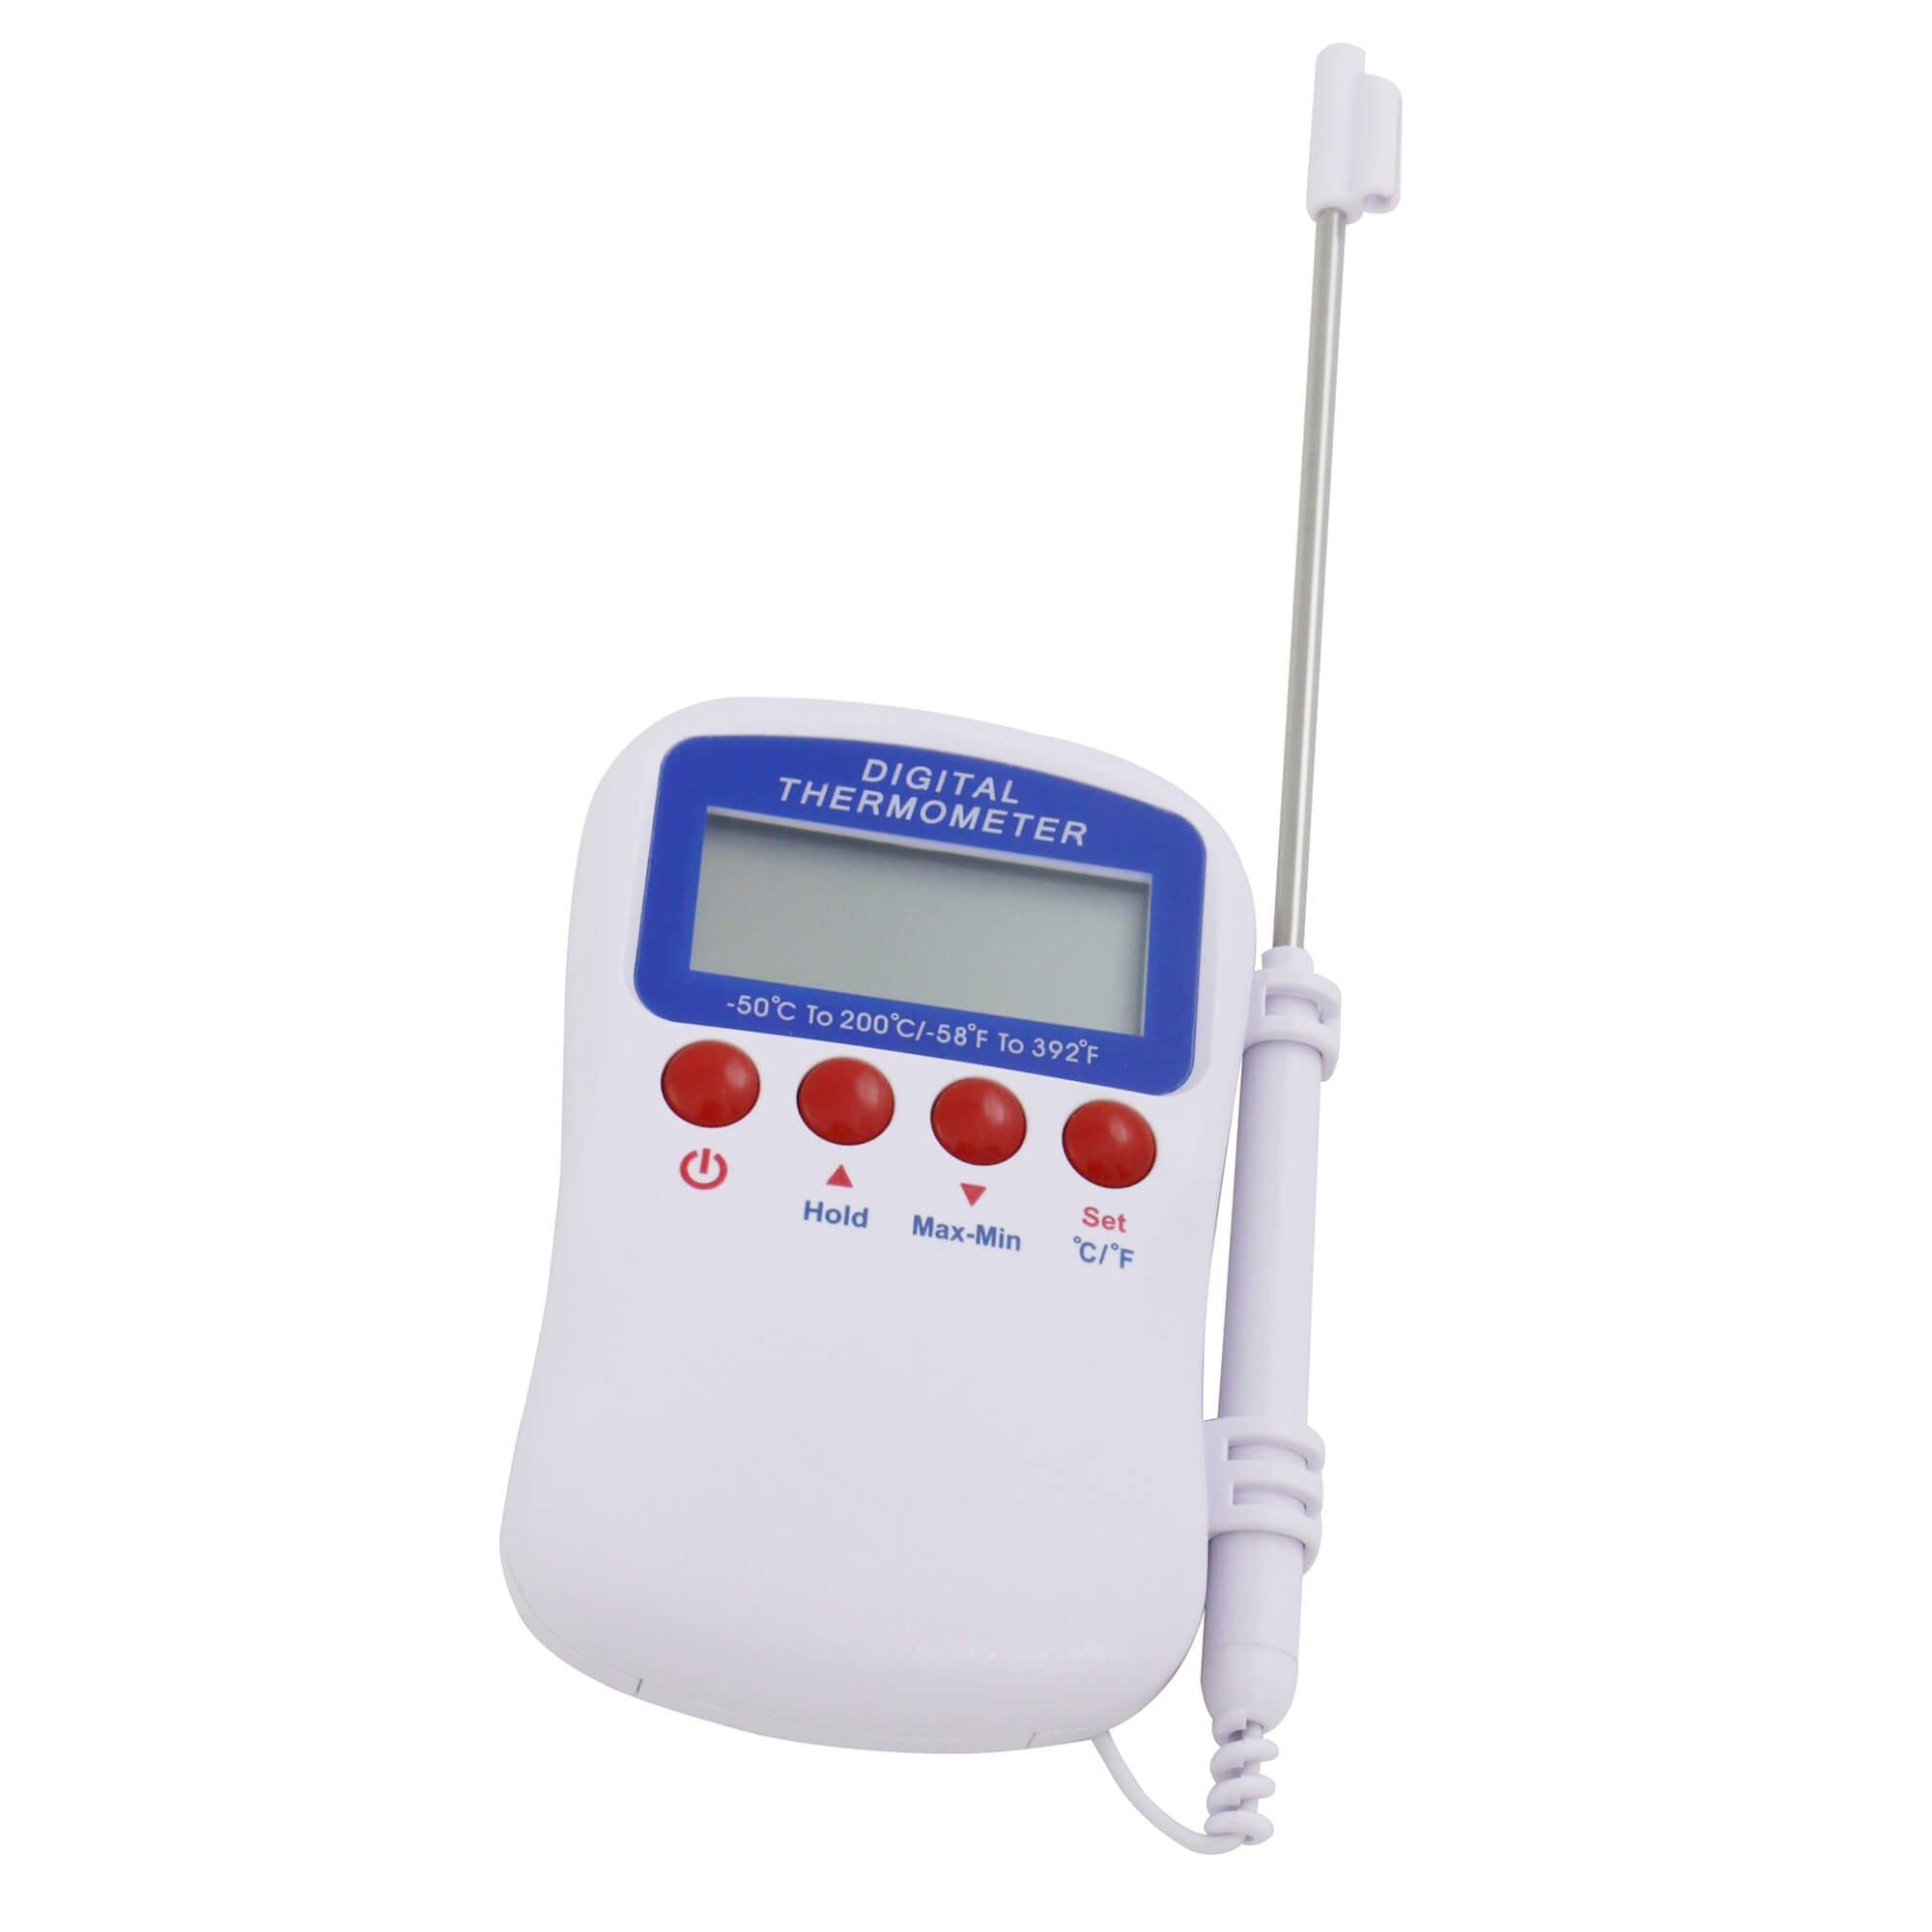 Proex Digital Thermometer